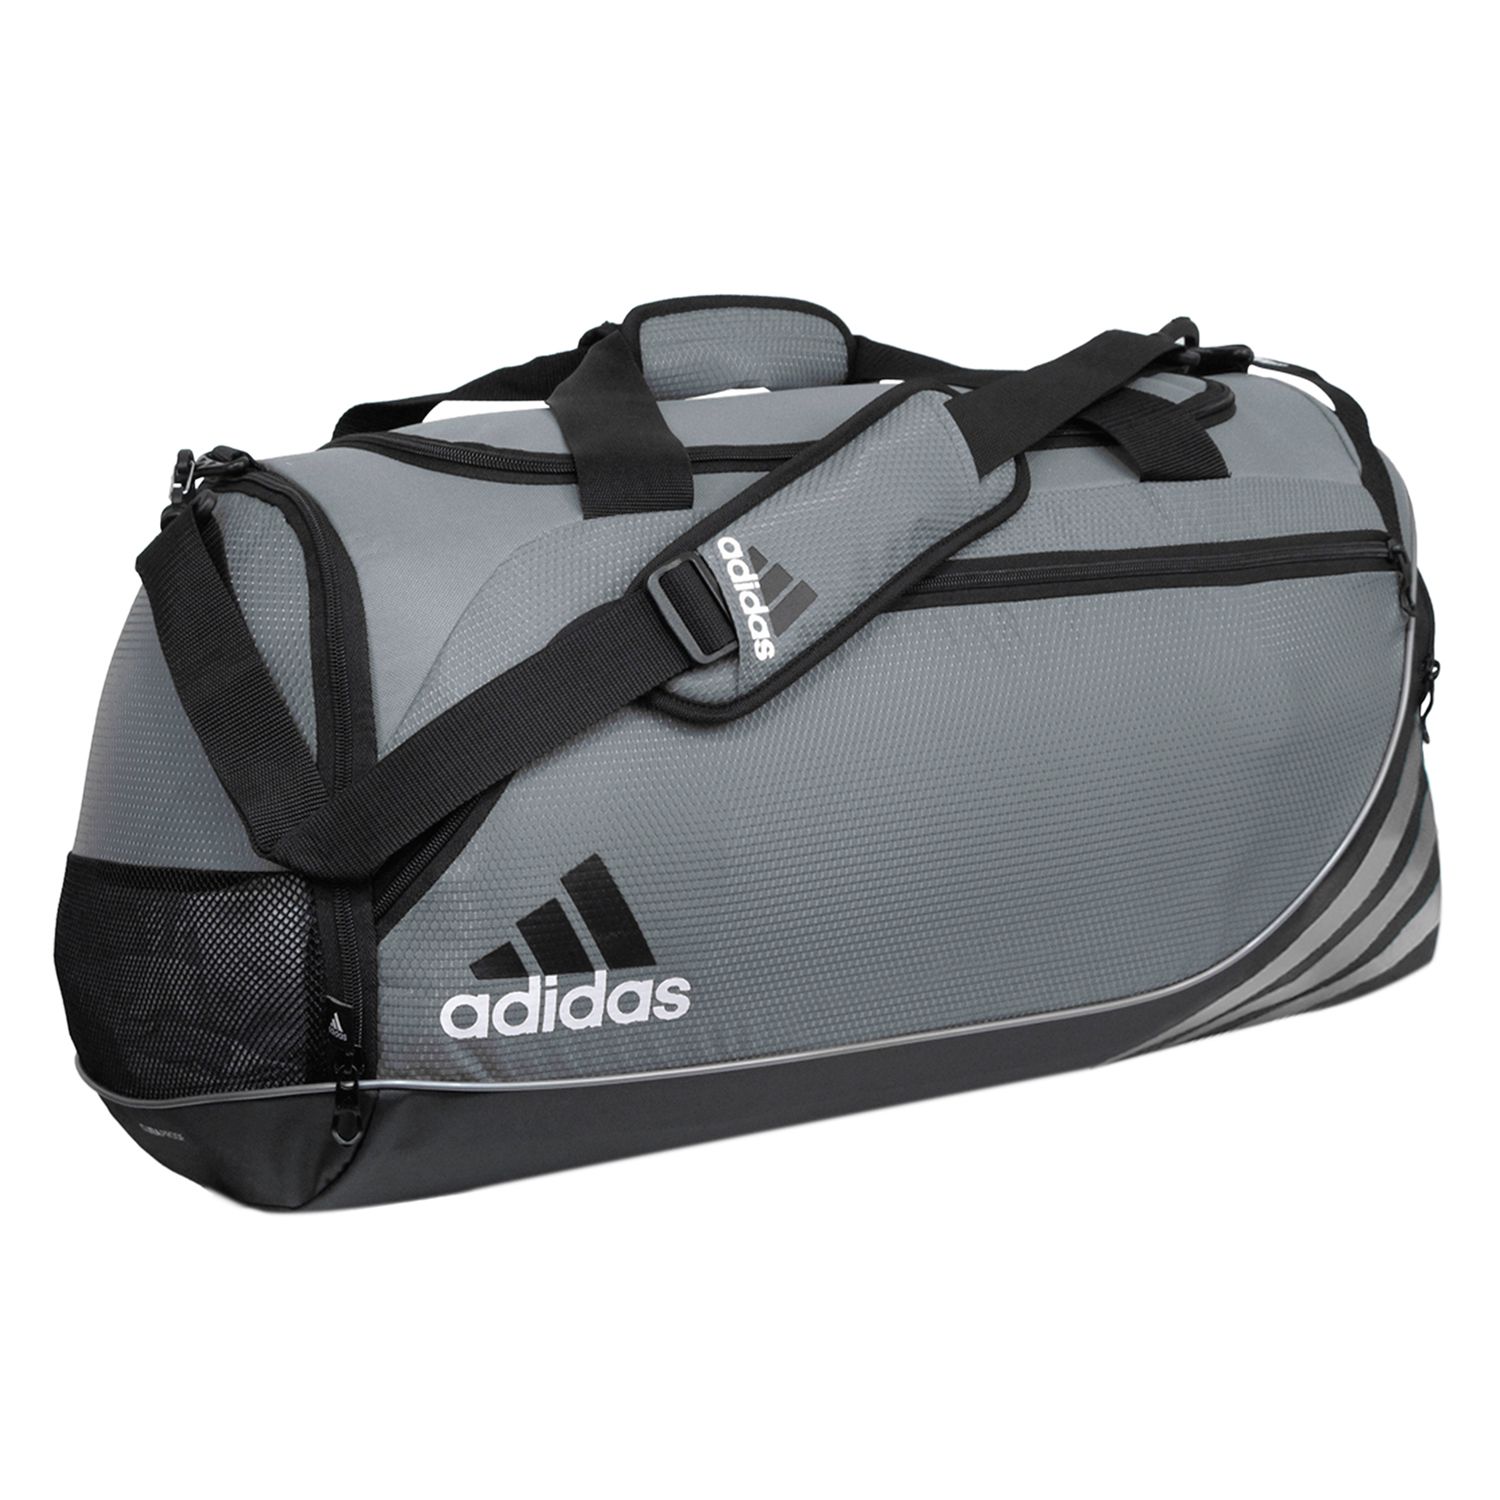 adidas Team Speed Medium Duffel Bag